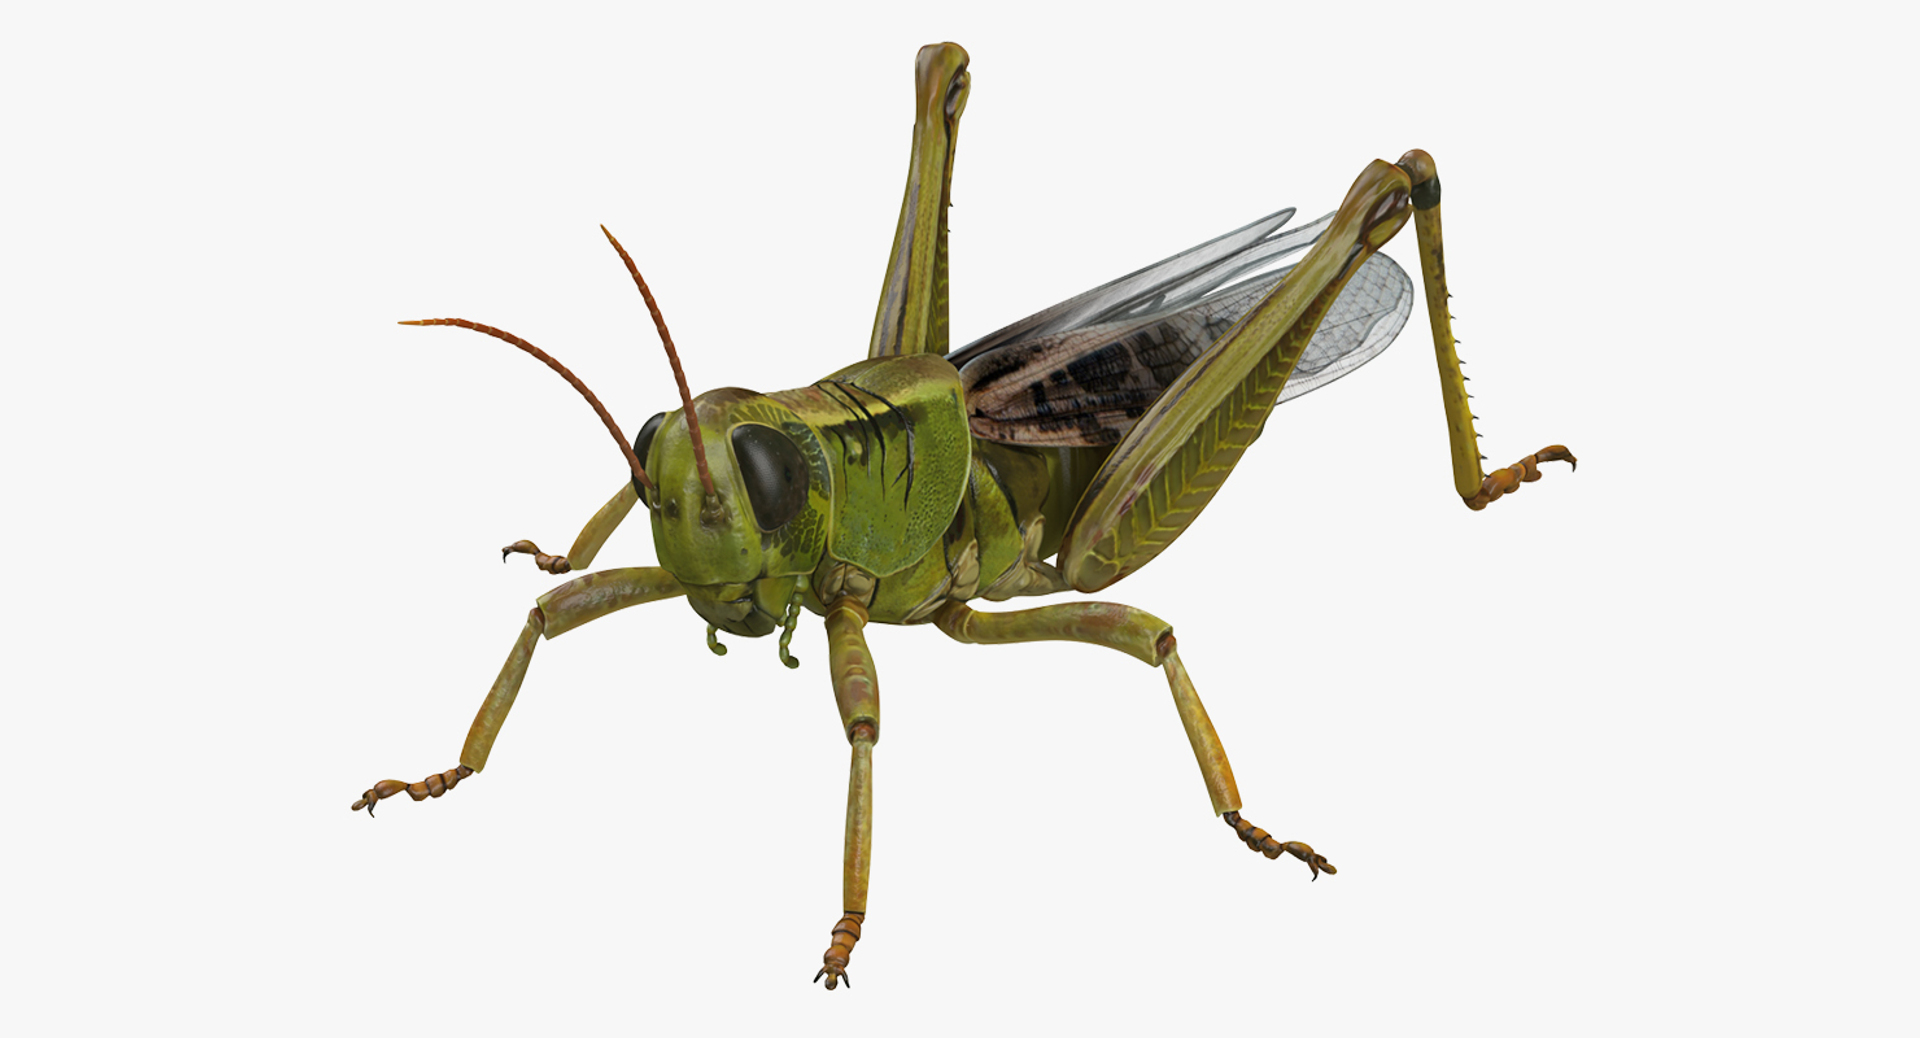 Grasshopper картинка для детей на прозрачном фоне